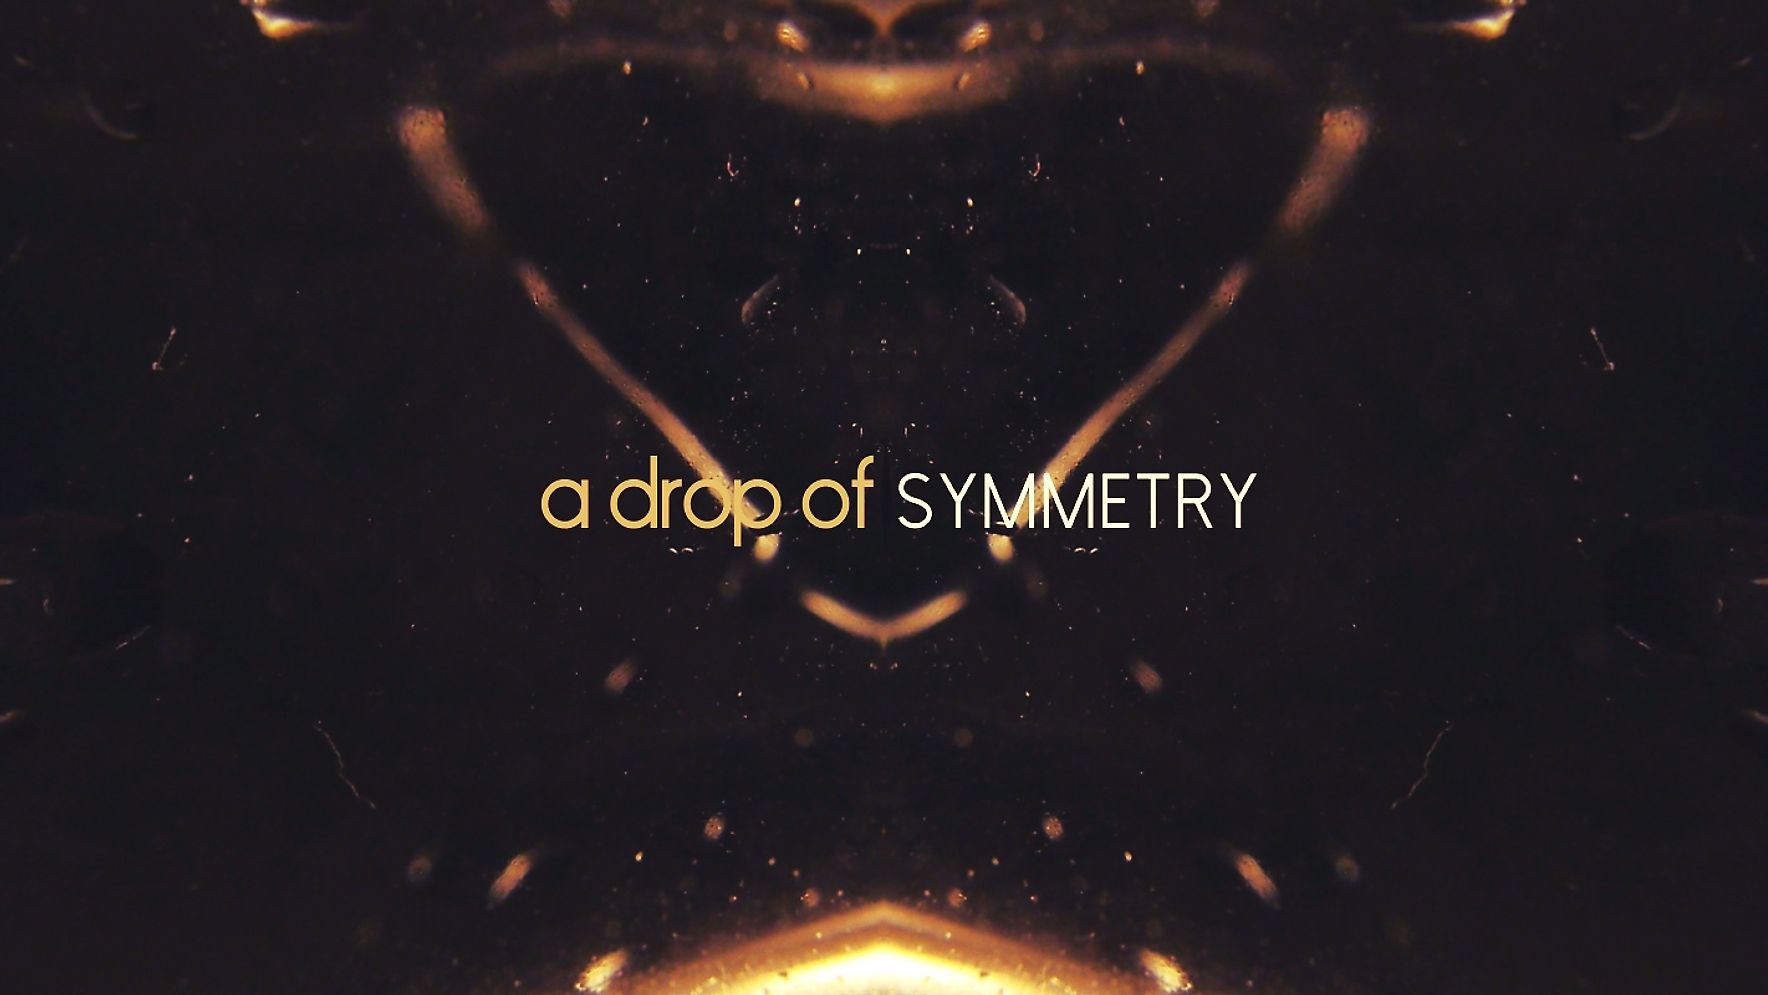 A drop of symmetry